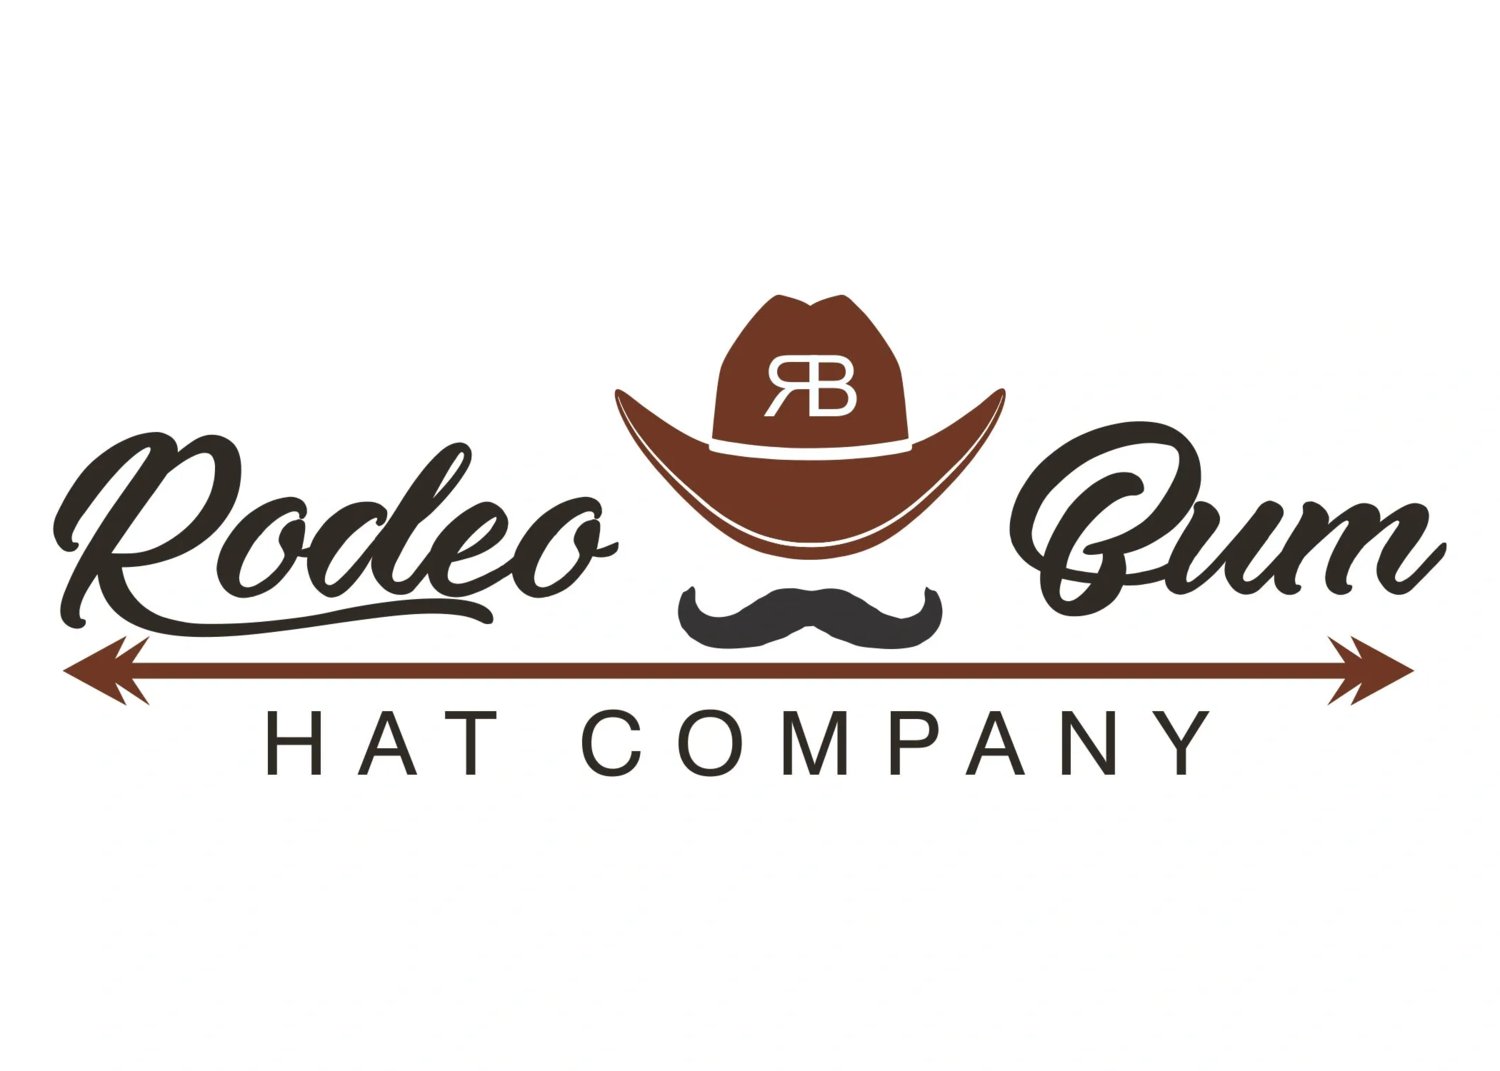 Rodeo Bum Hat Company